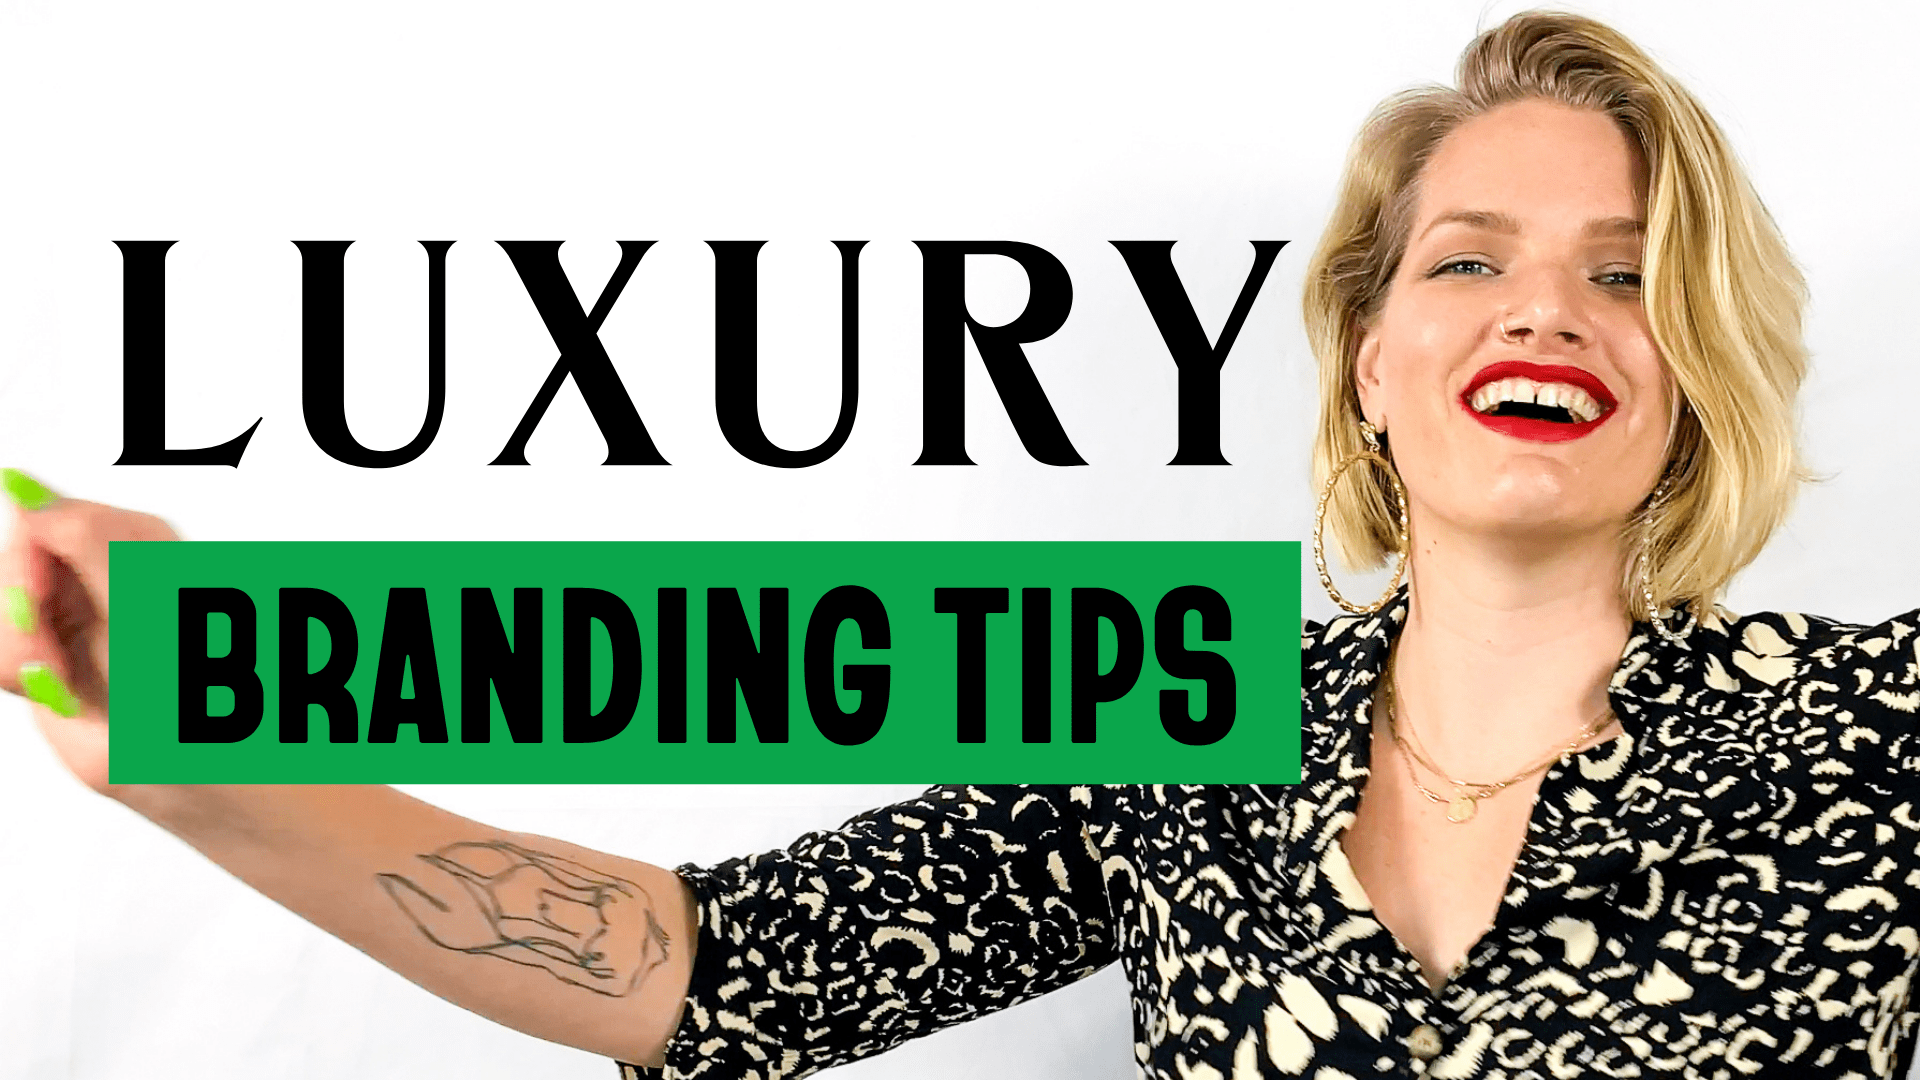 Luxury Branding Tips